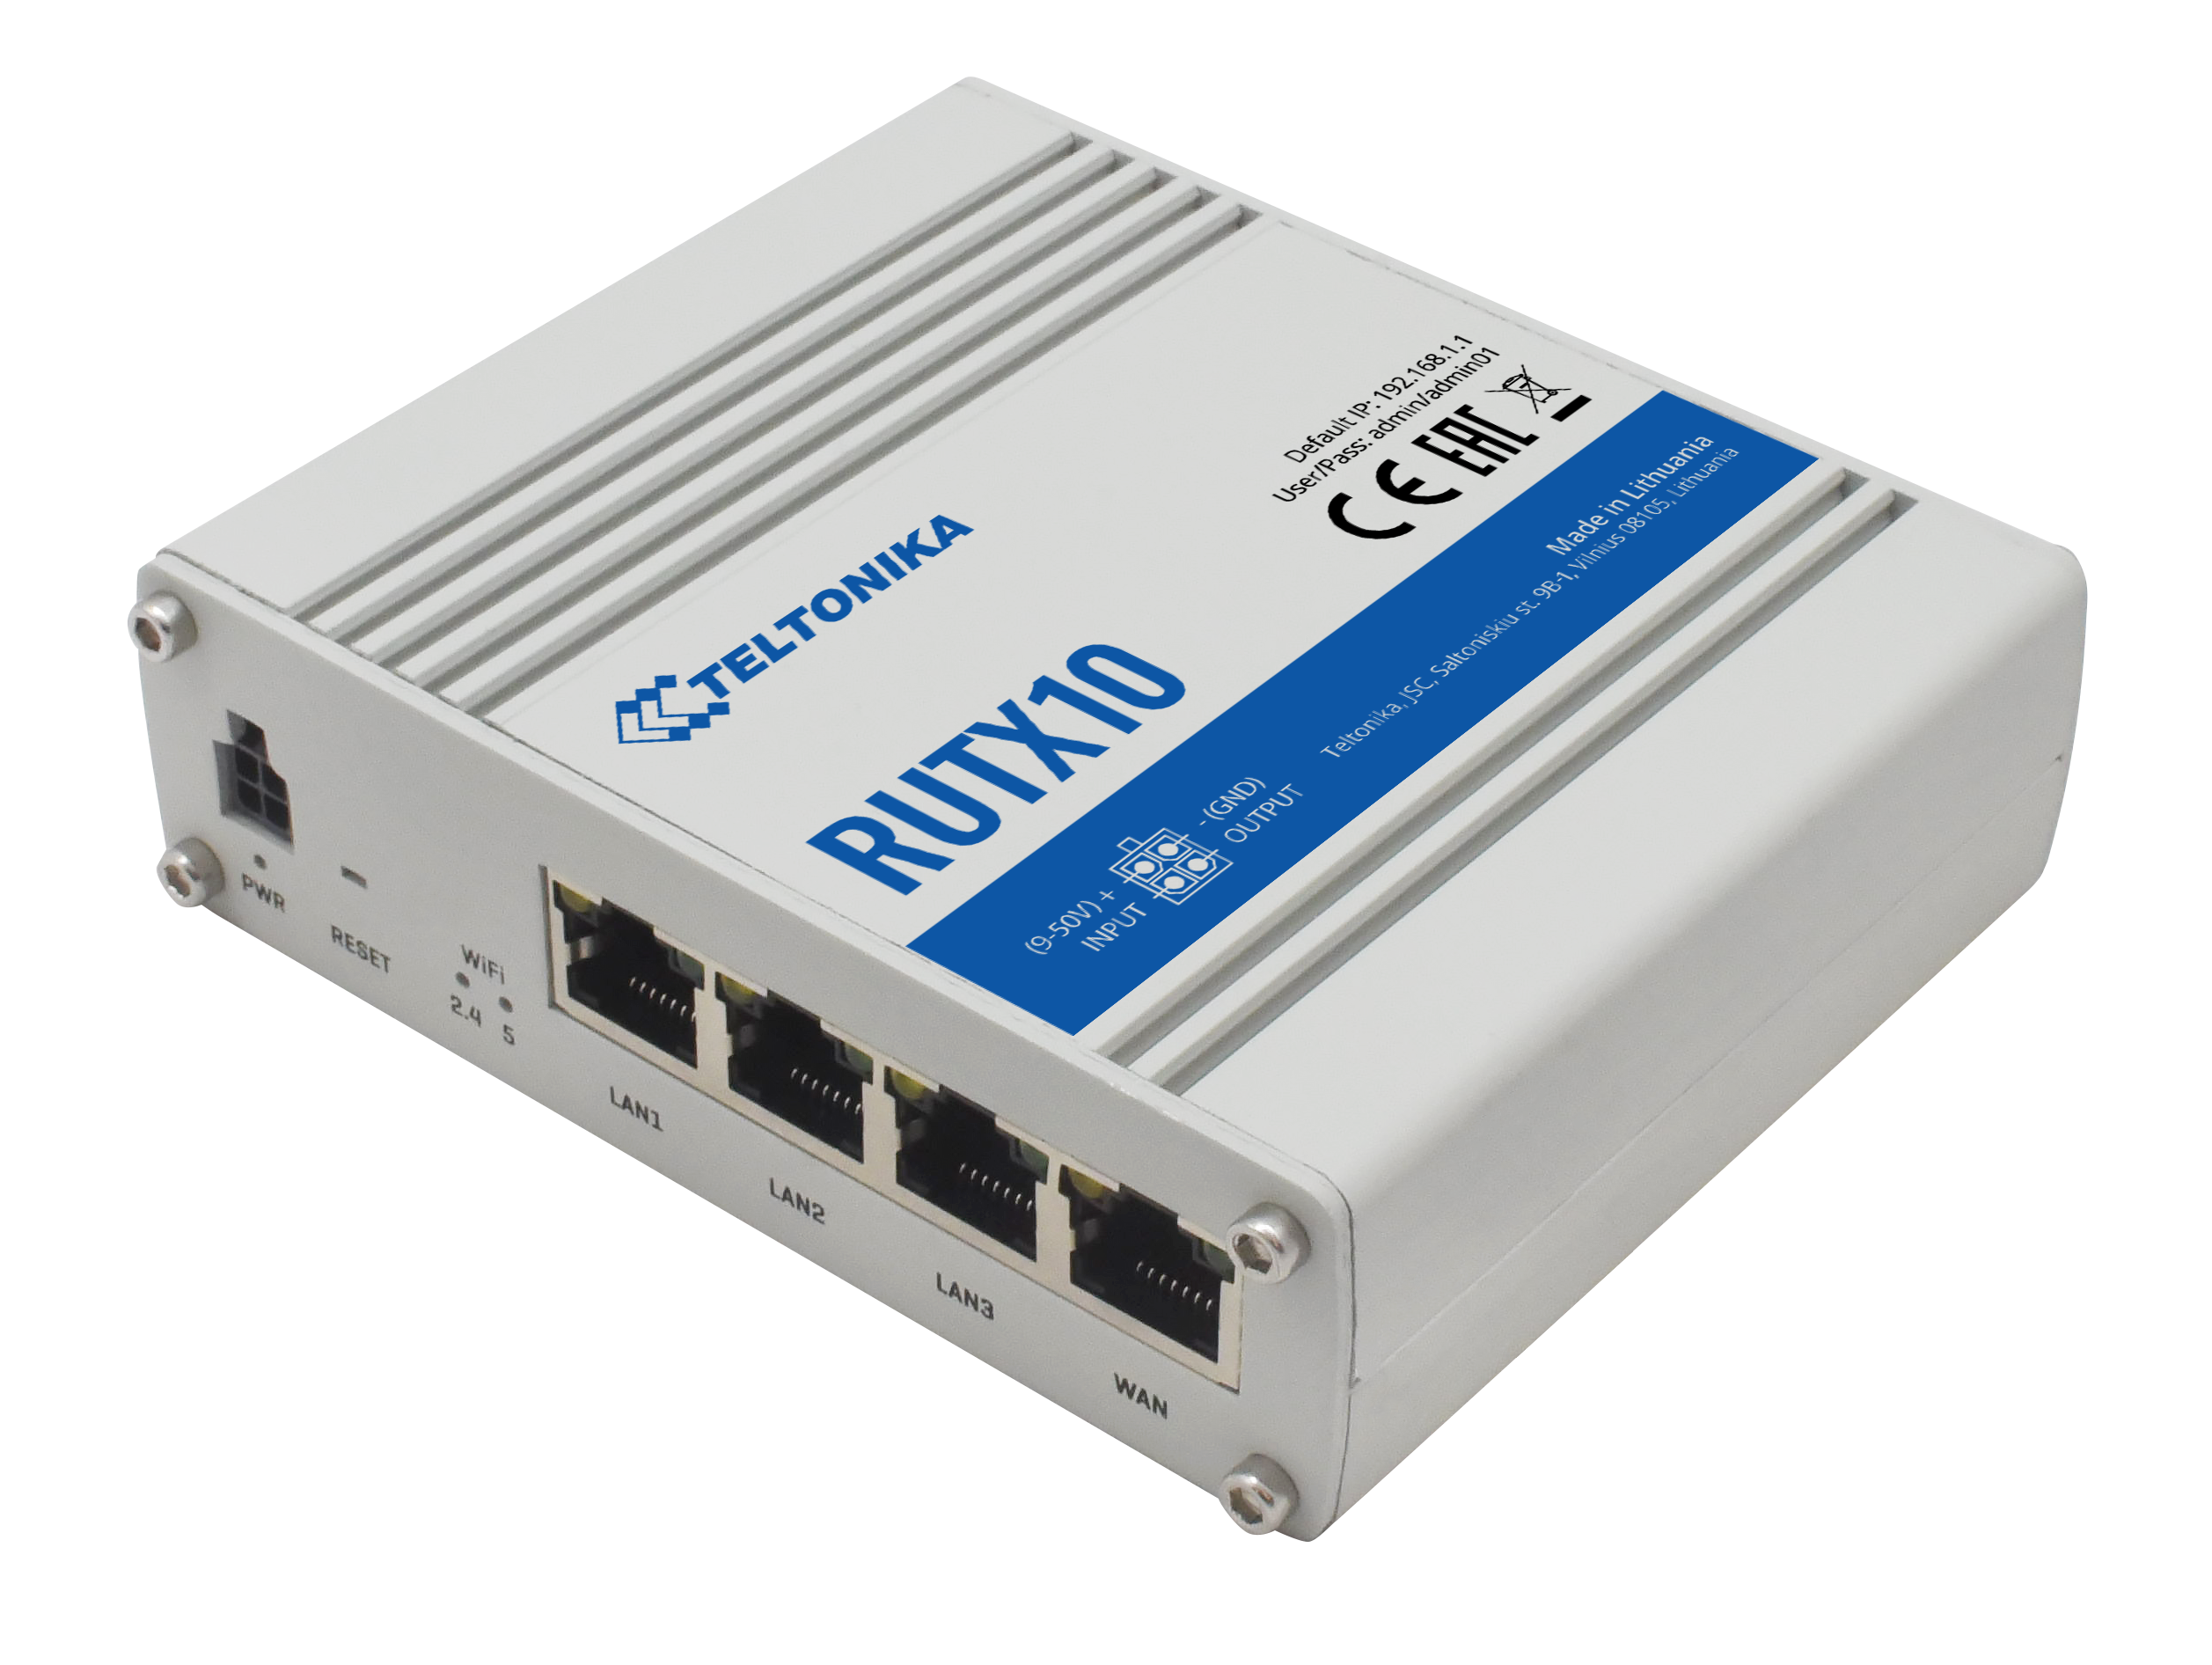 RUTX10 – Gigabit + WiFi dual band